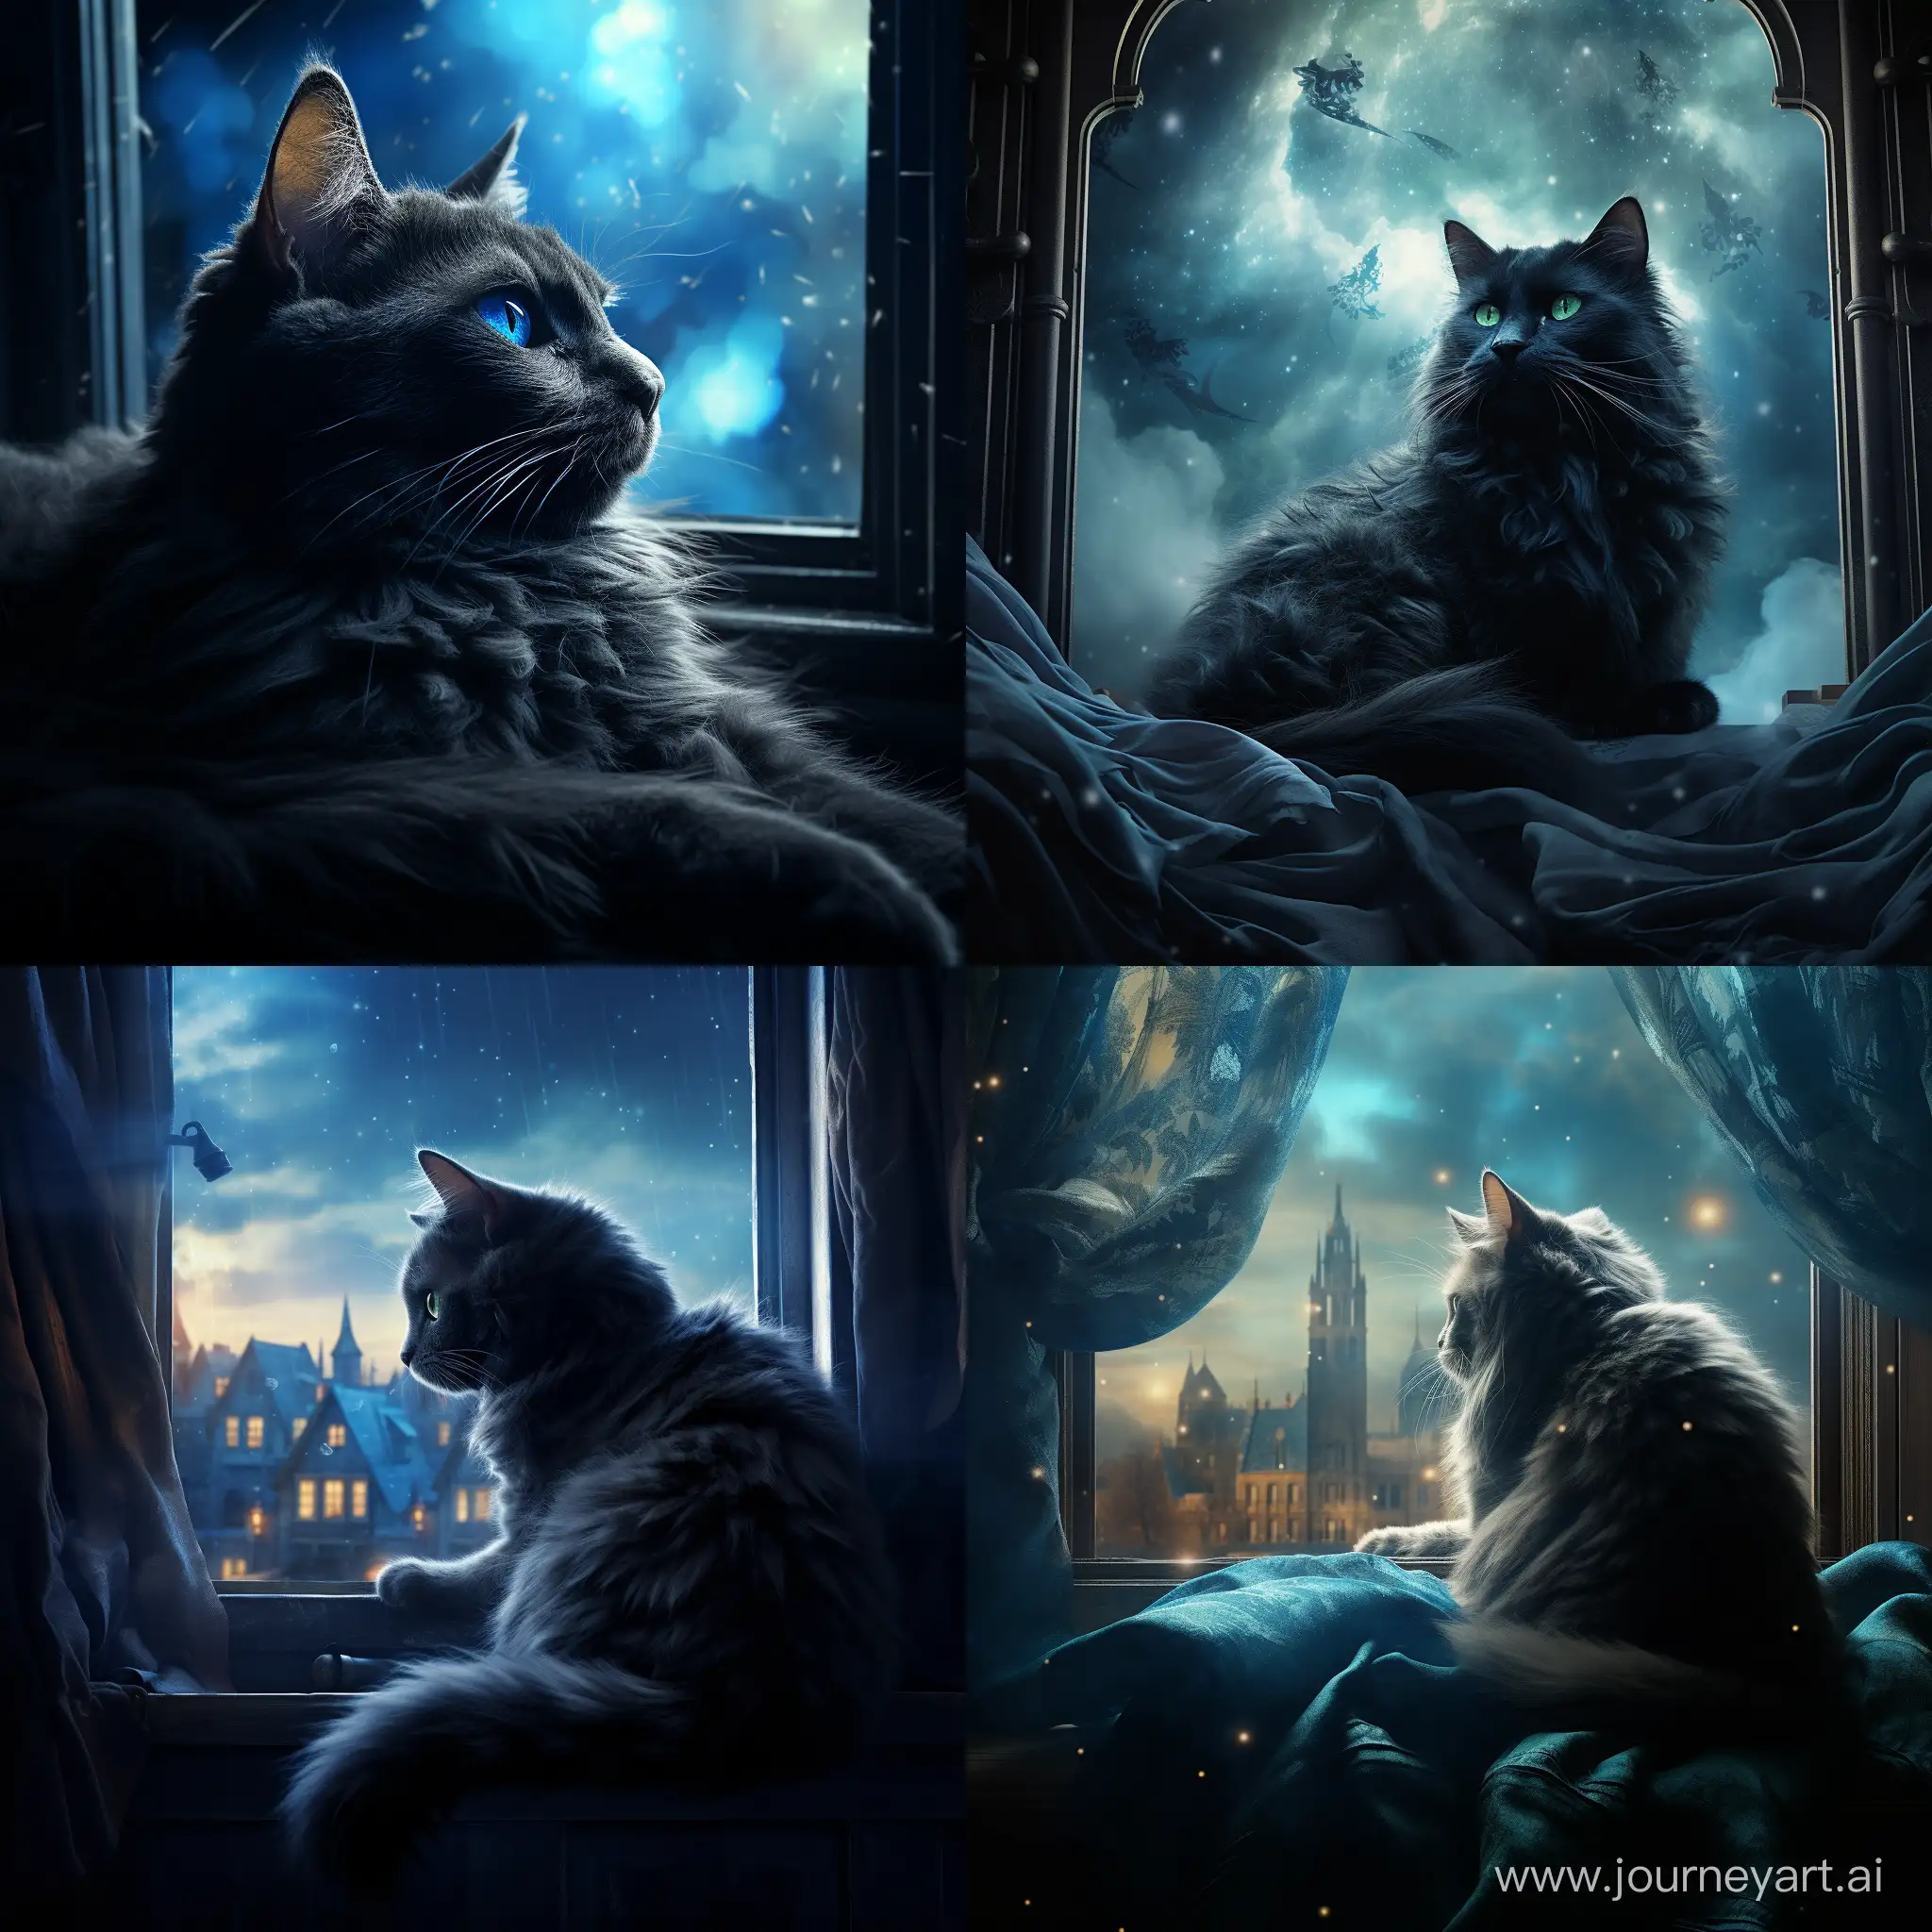 Enchanting-Blue-Cat-Relaxing-by-Window-in-Fantasy-Atmosphere